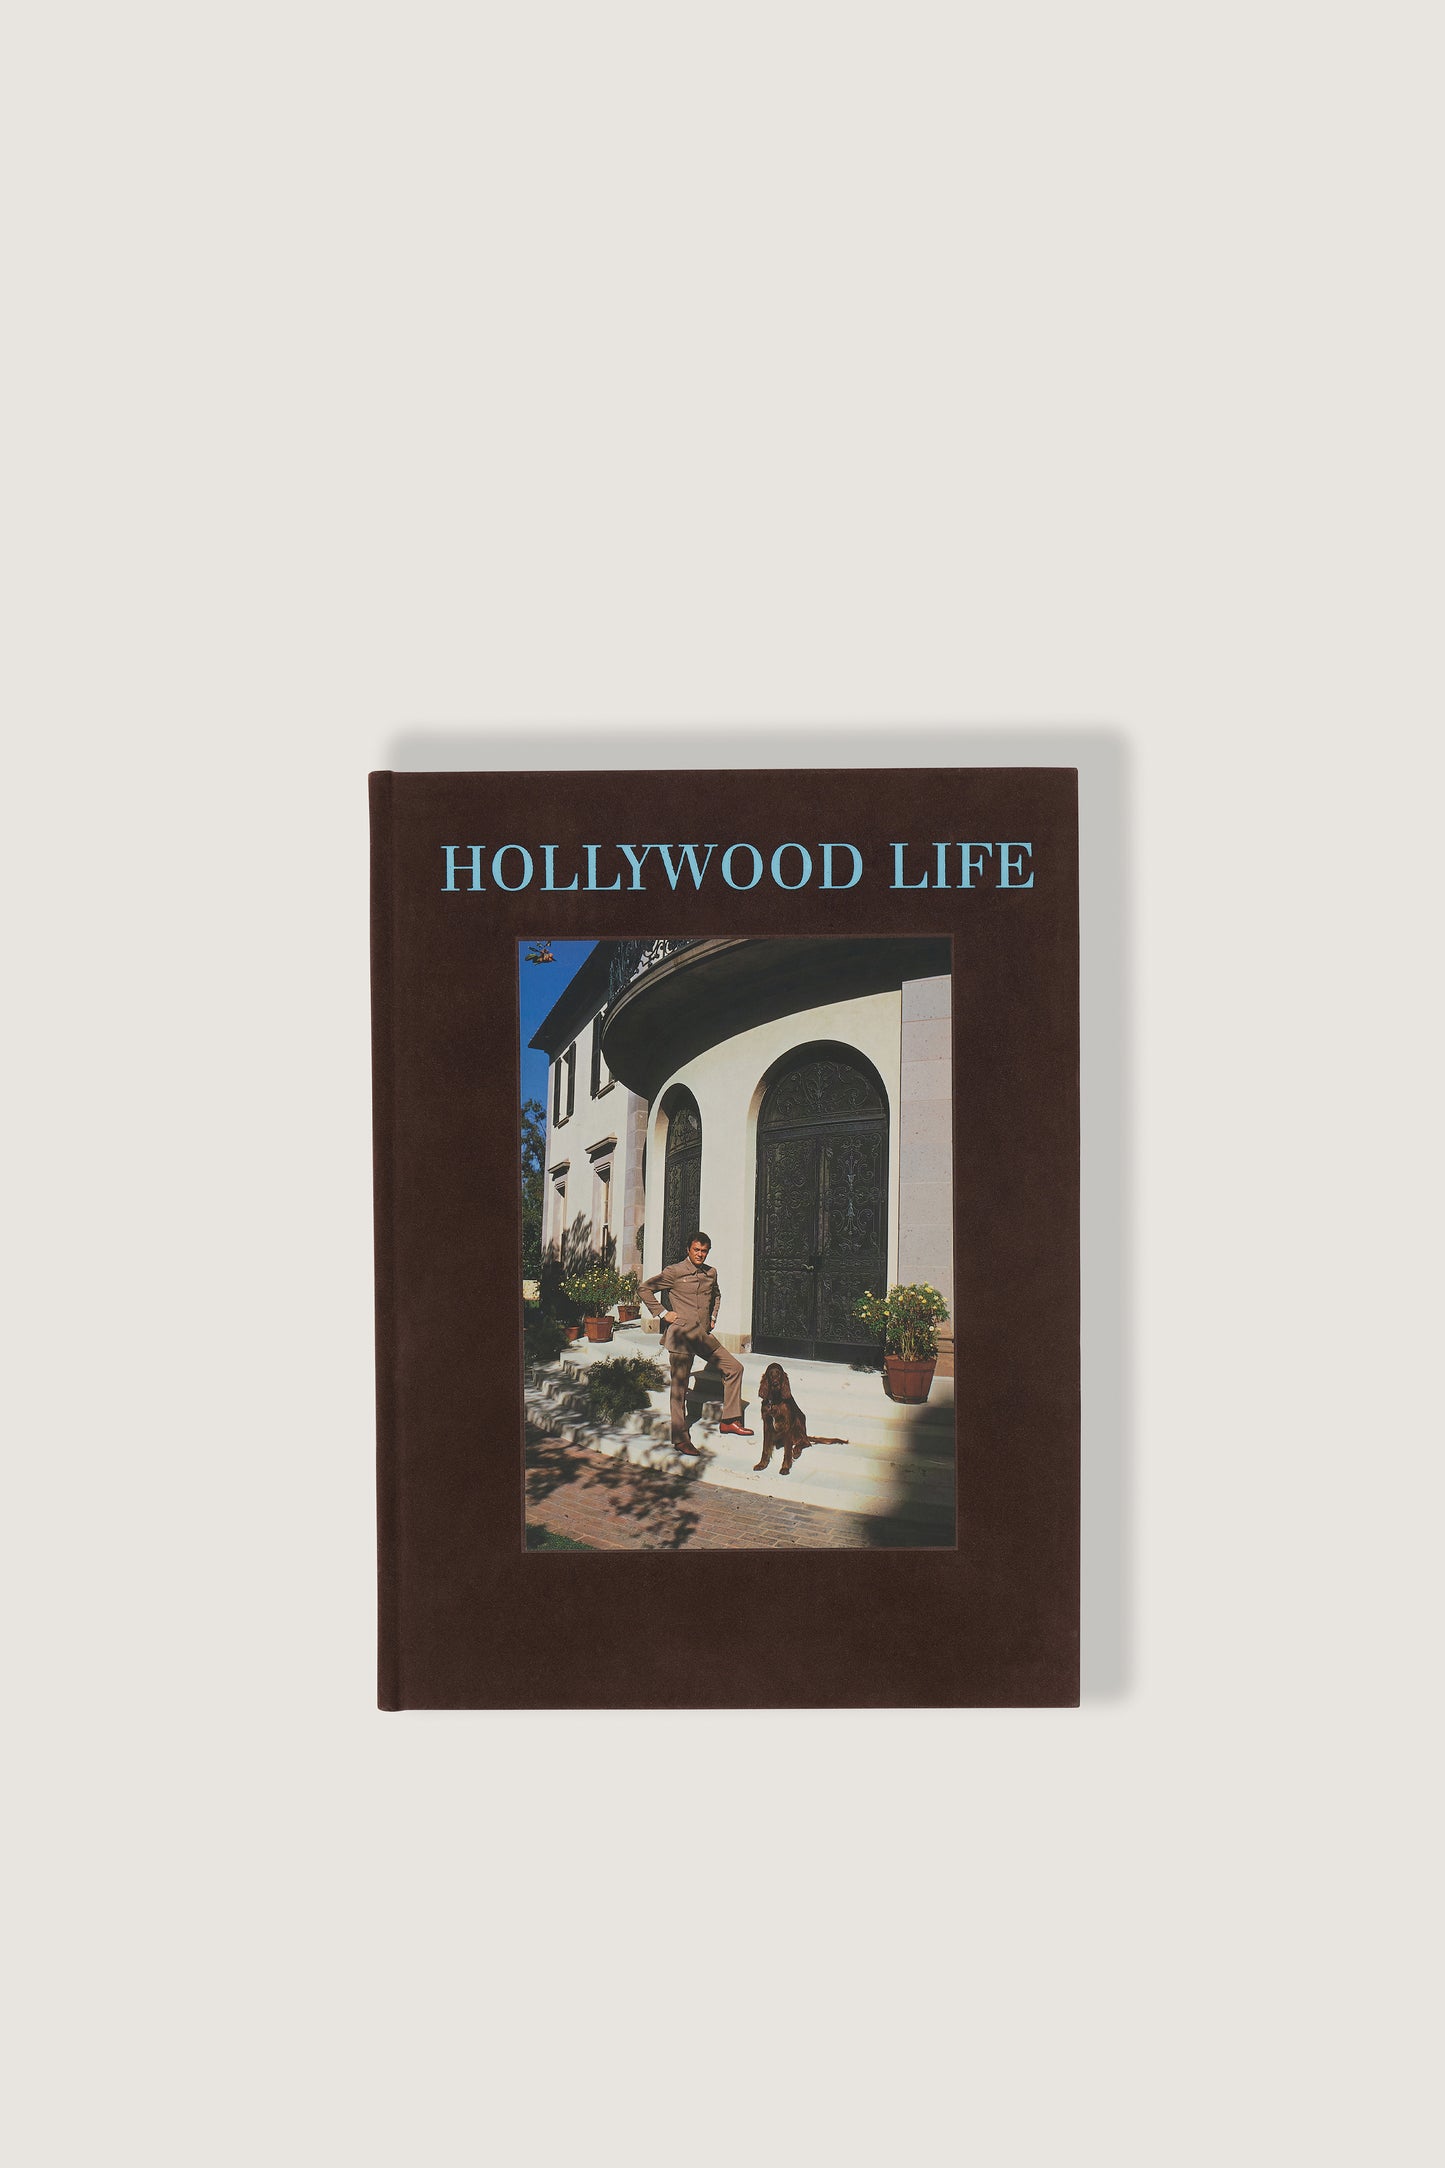 BOOK "HOLLYWOOD LIFE"